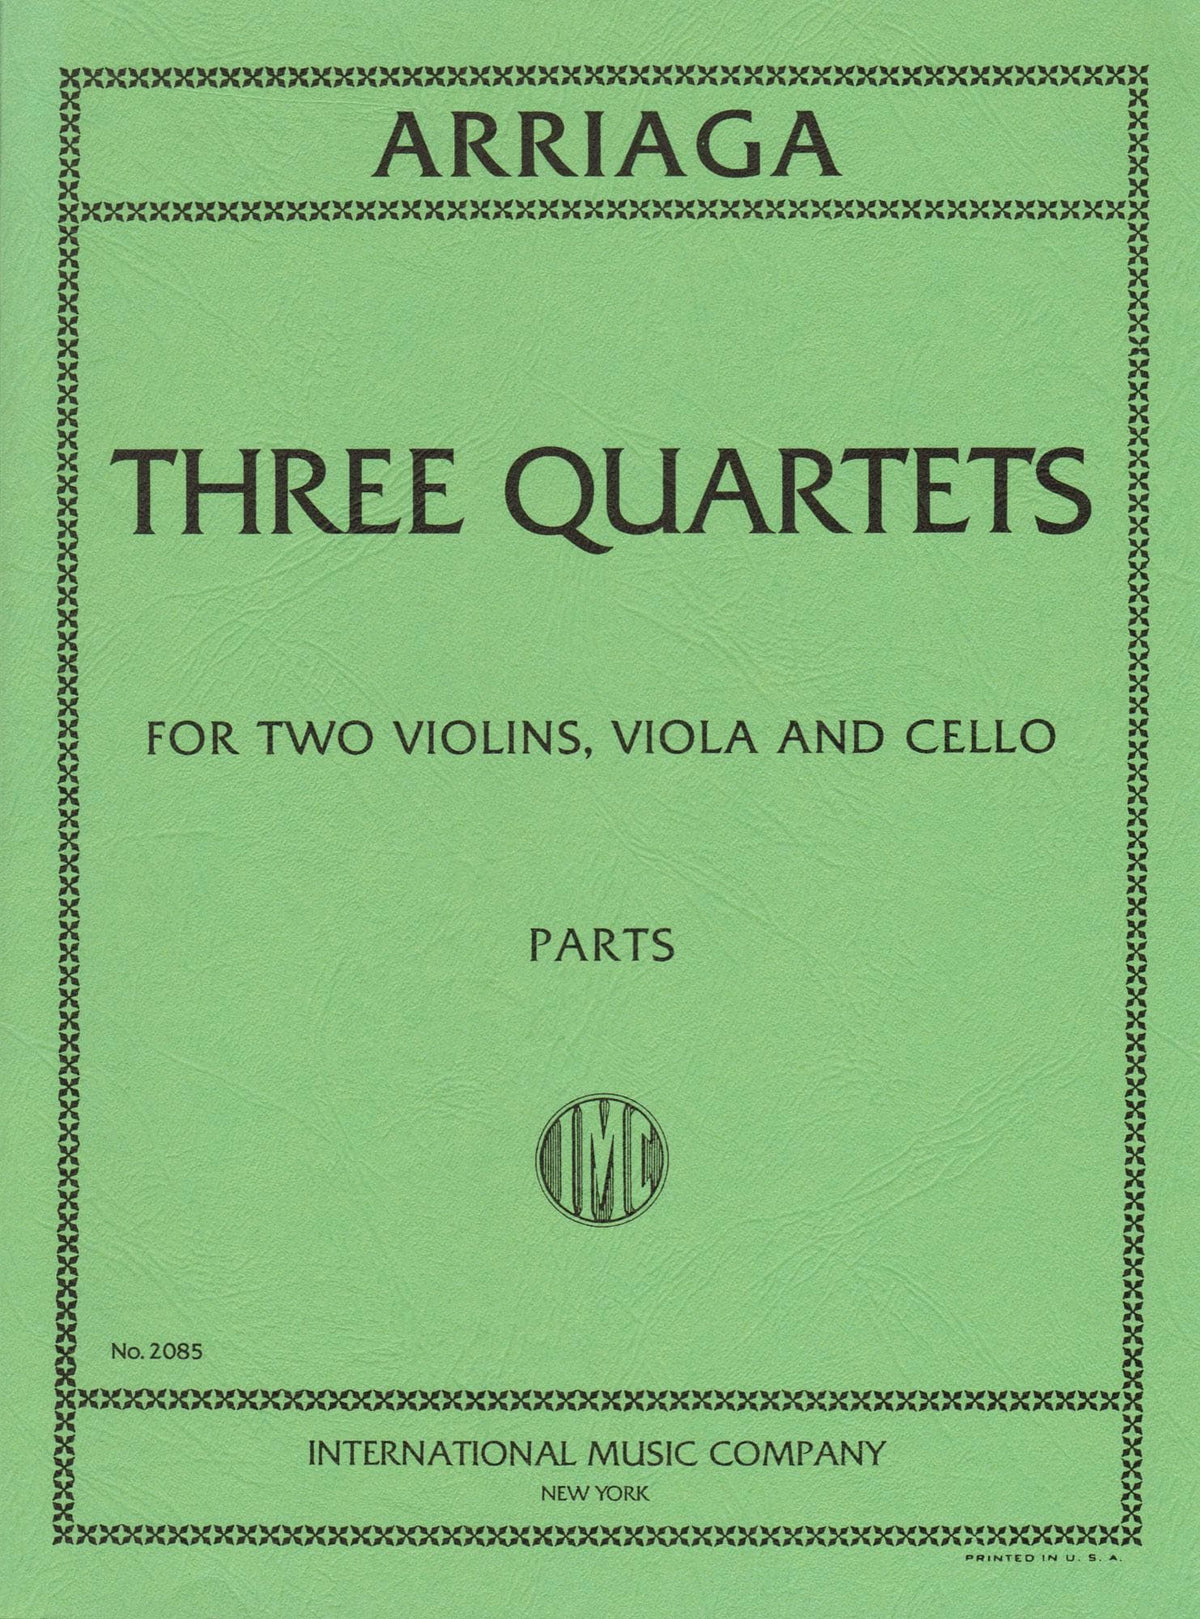 Arriaga, Juan Crisóstomo - Three Quartets - Parts for Two Violins, Viola and Cello - International Edition